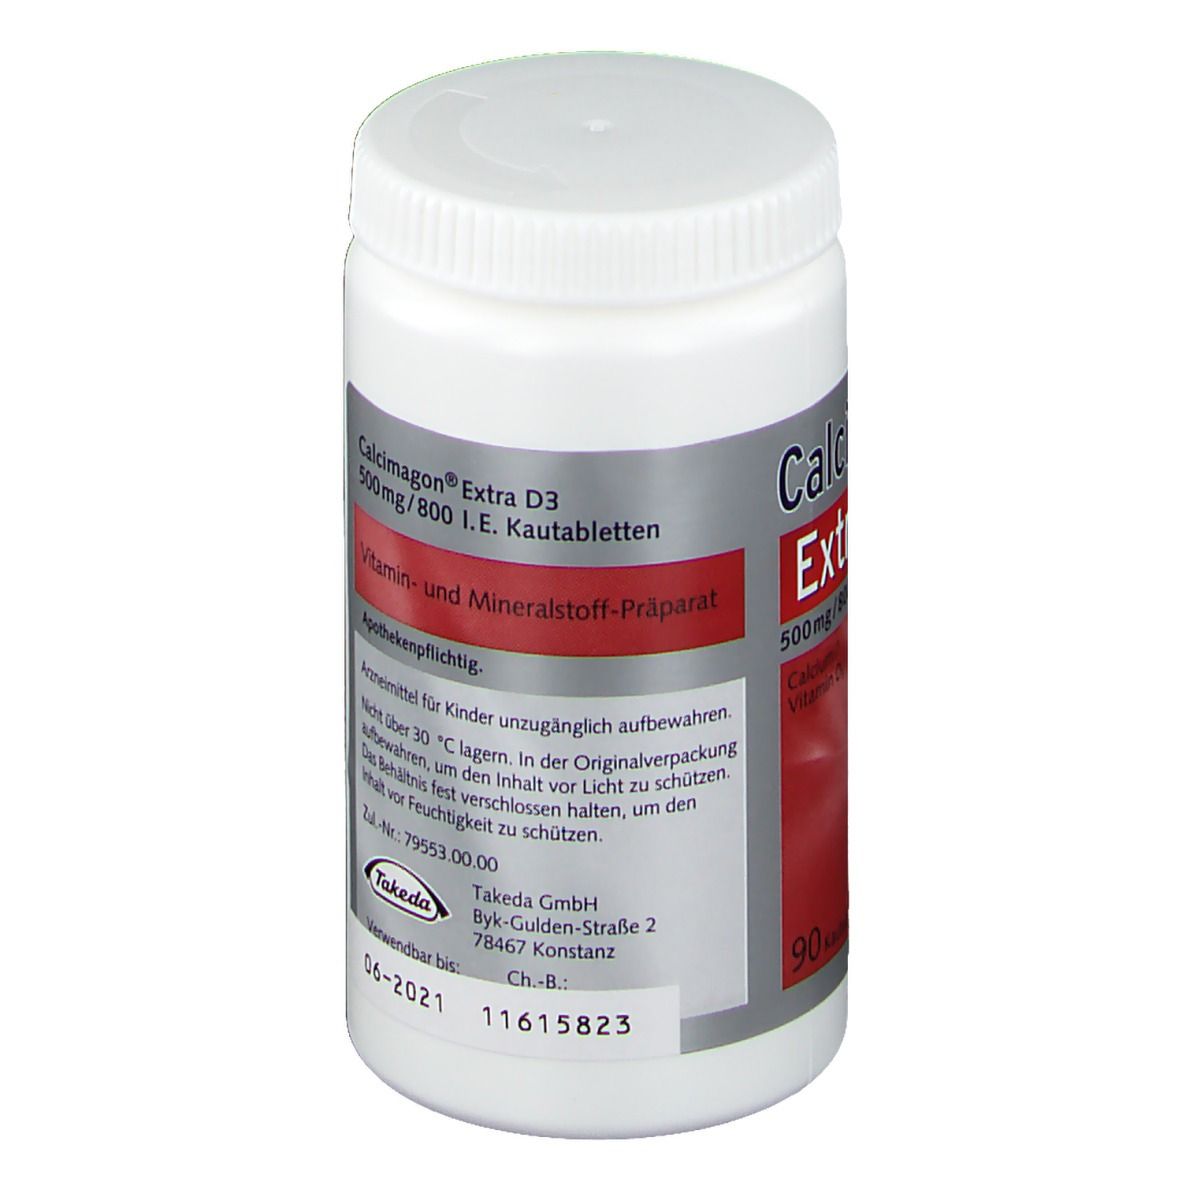 Calcimagon® Extra D3 500 mg/ 800 I.E. Kautabletten